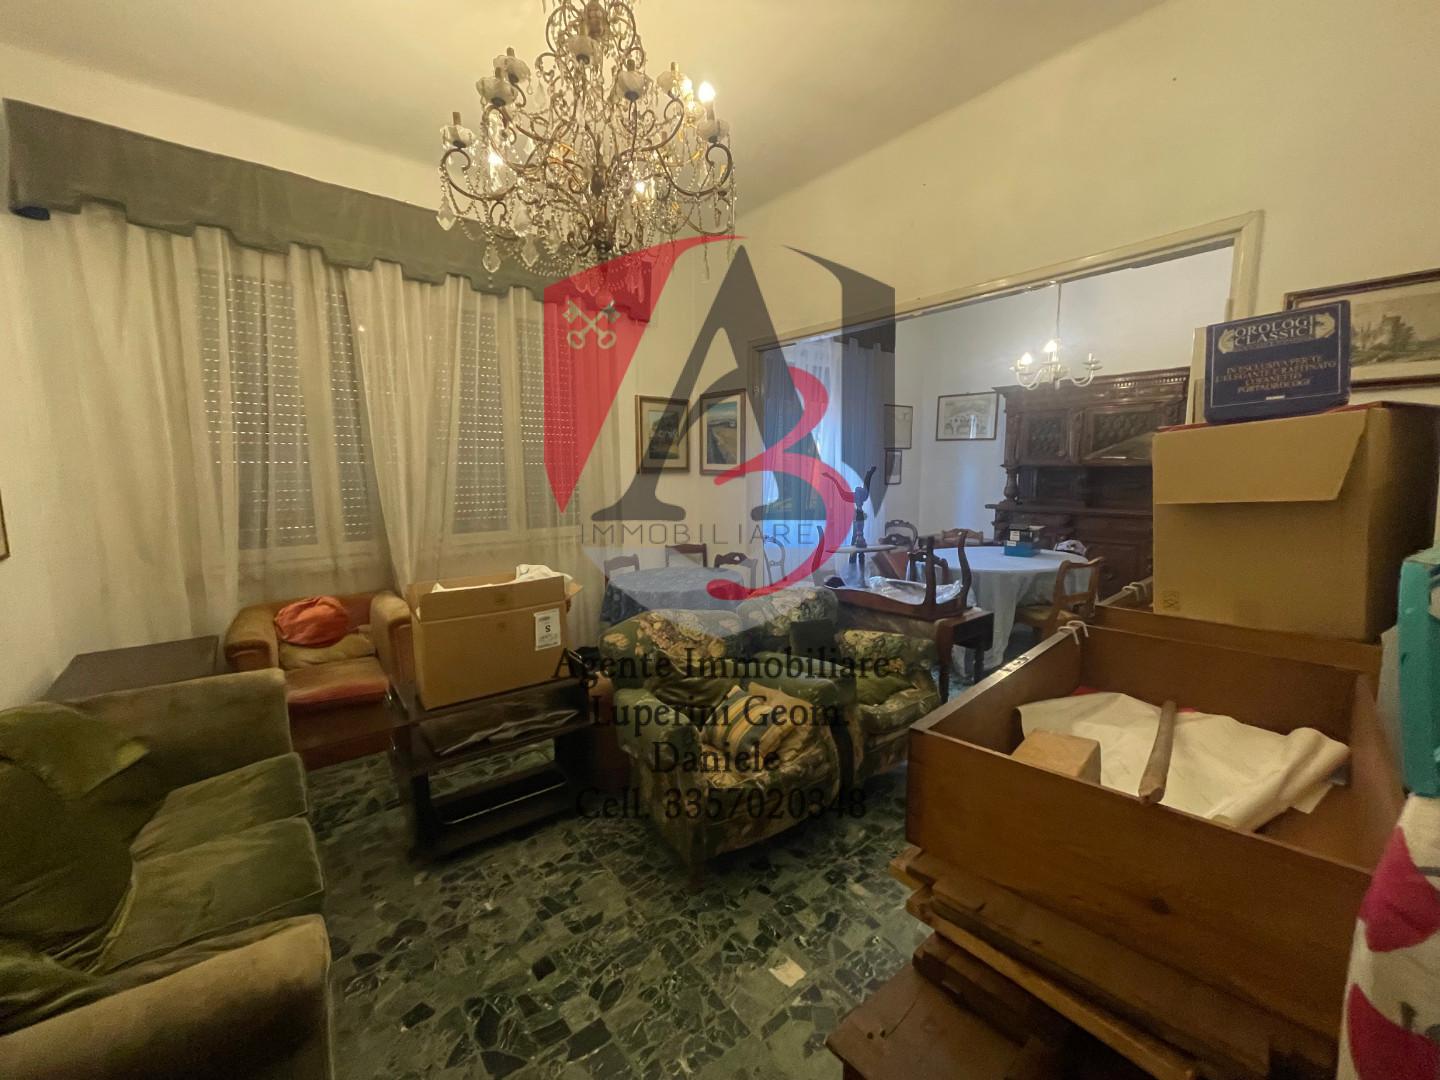 Apartment for sale in Pisa